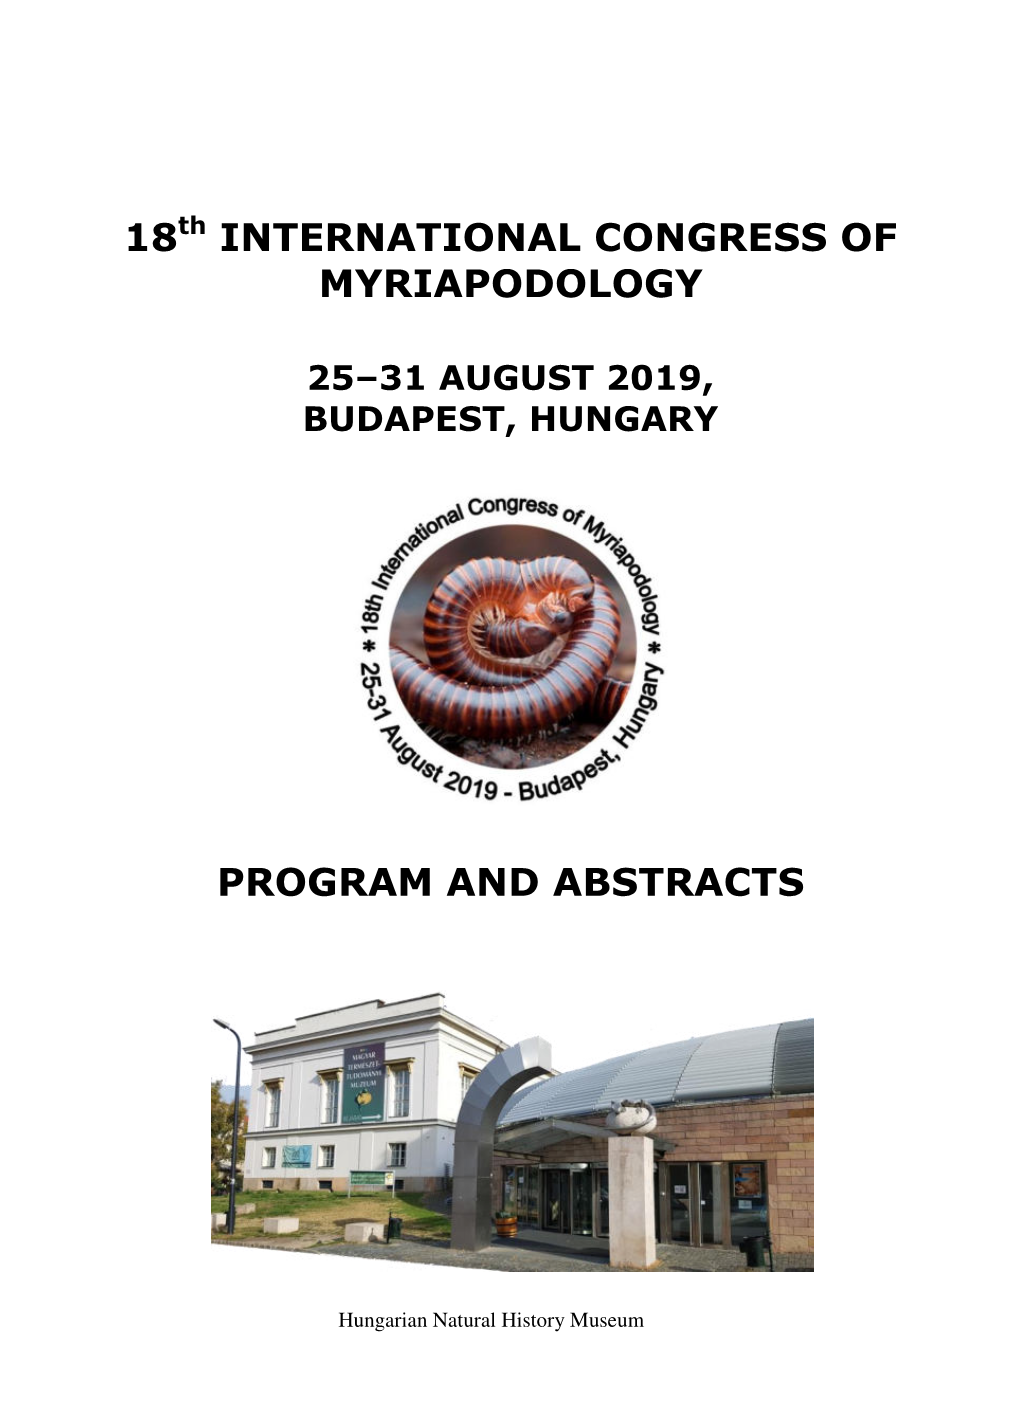 18 International Congress of Myriapodology Program